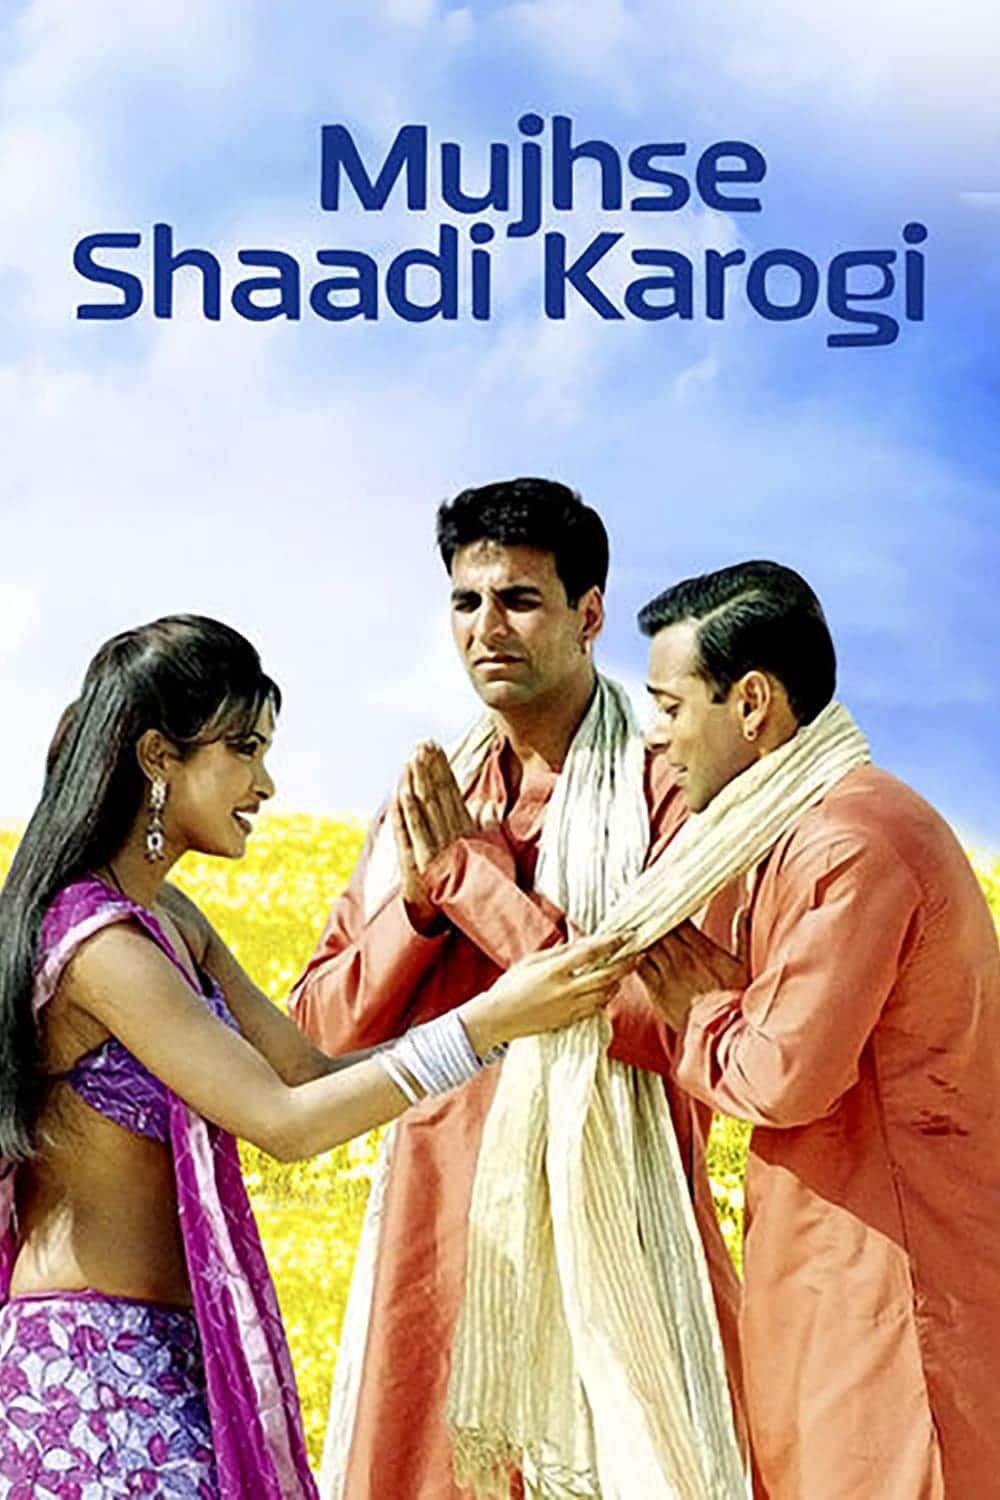 Poster for the movie "Mujhse Shaadi Karogi"